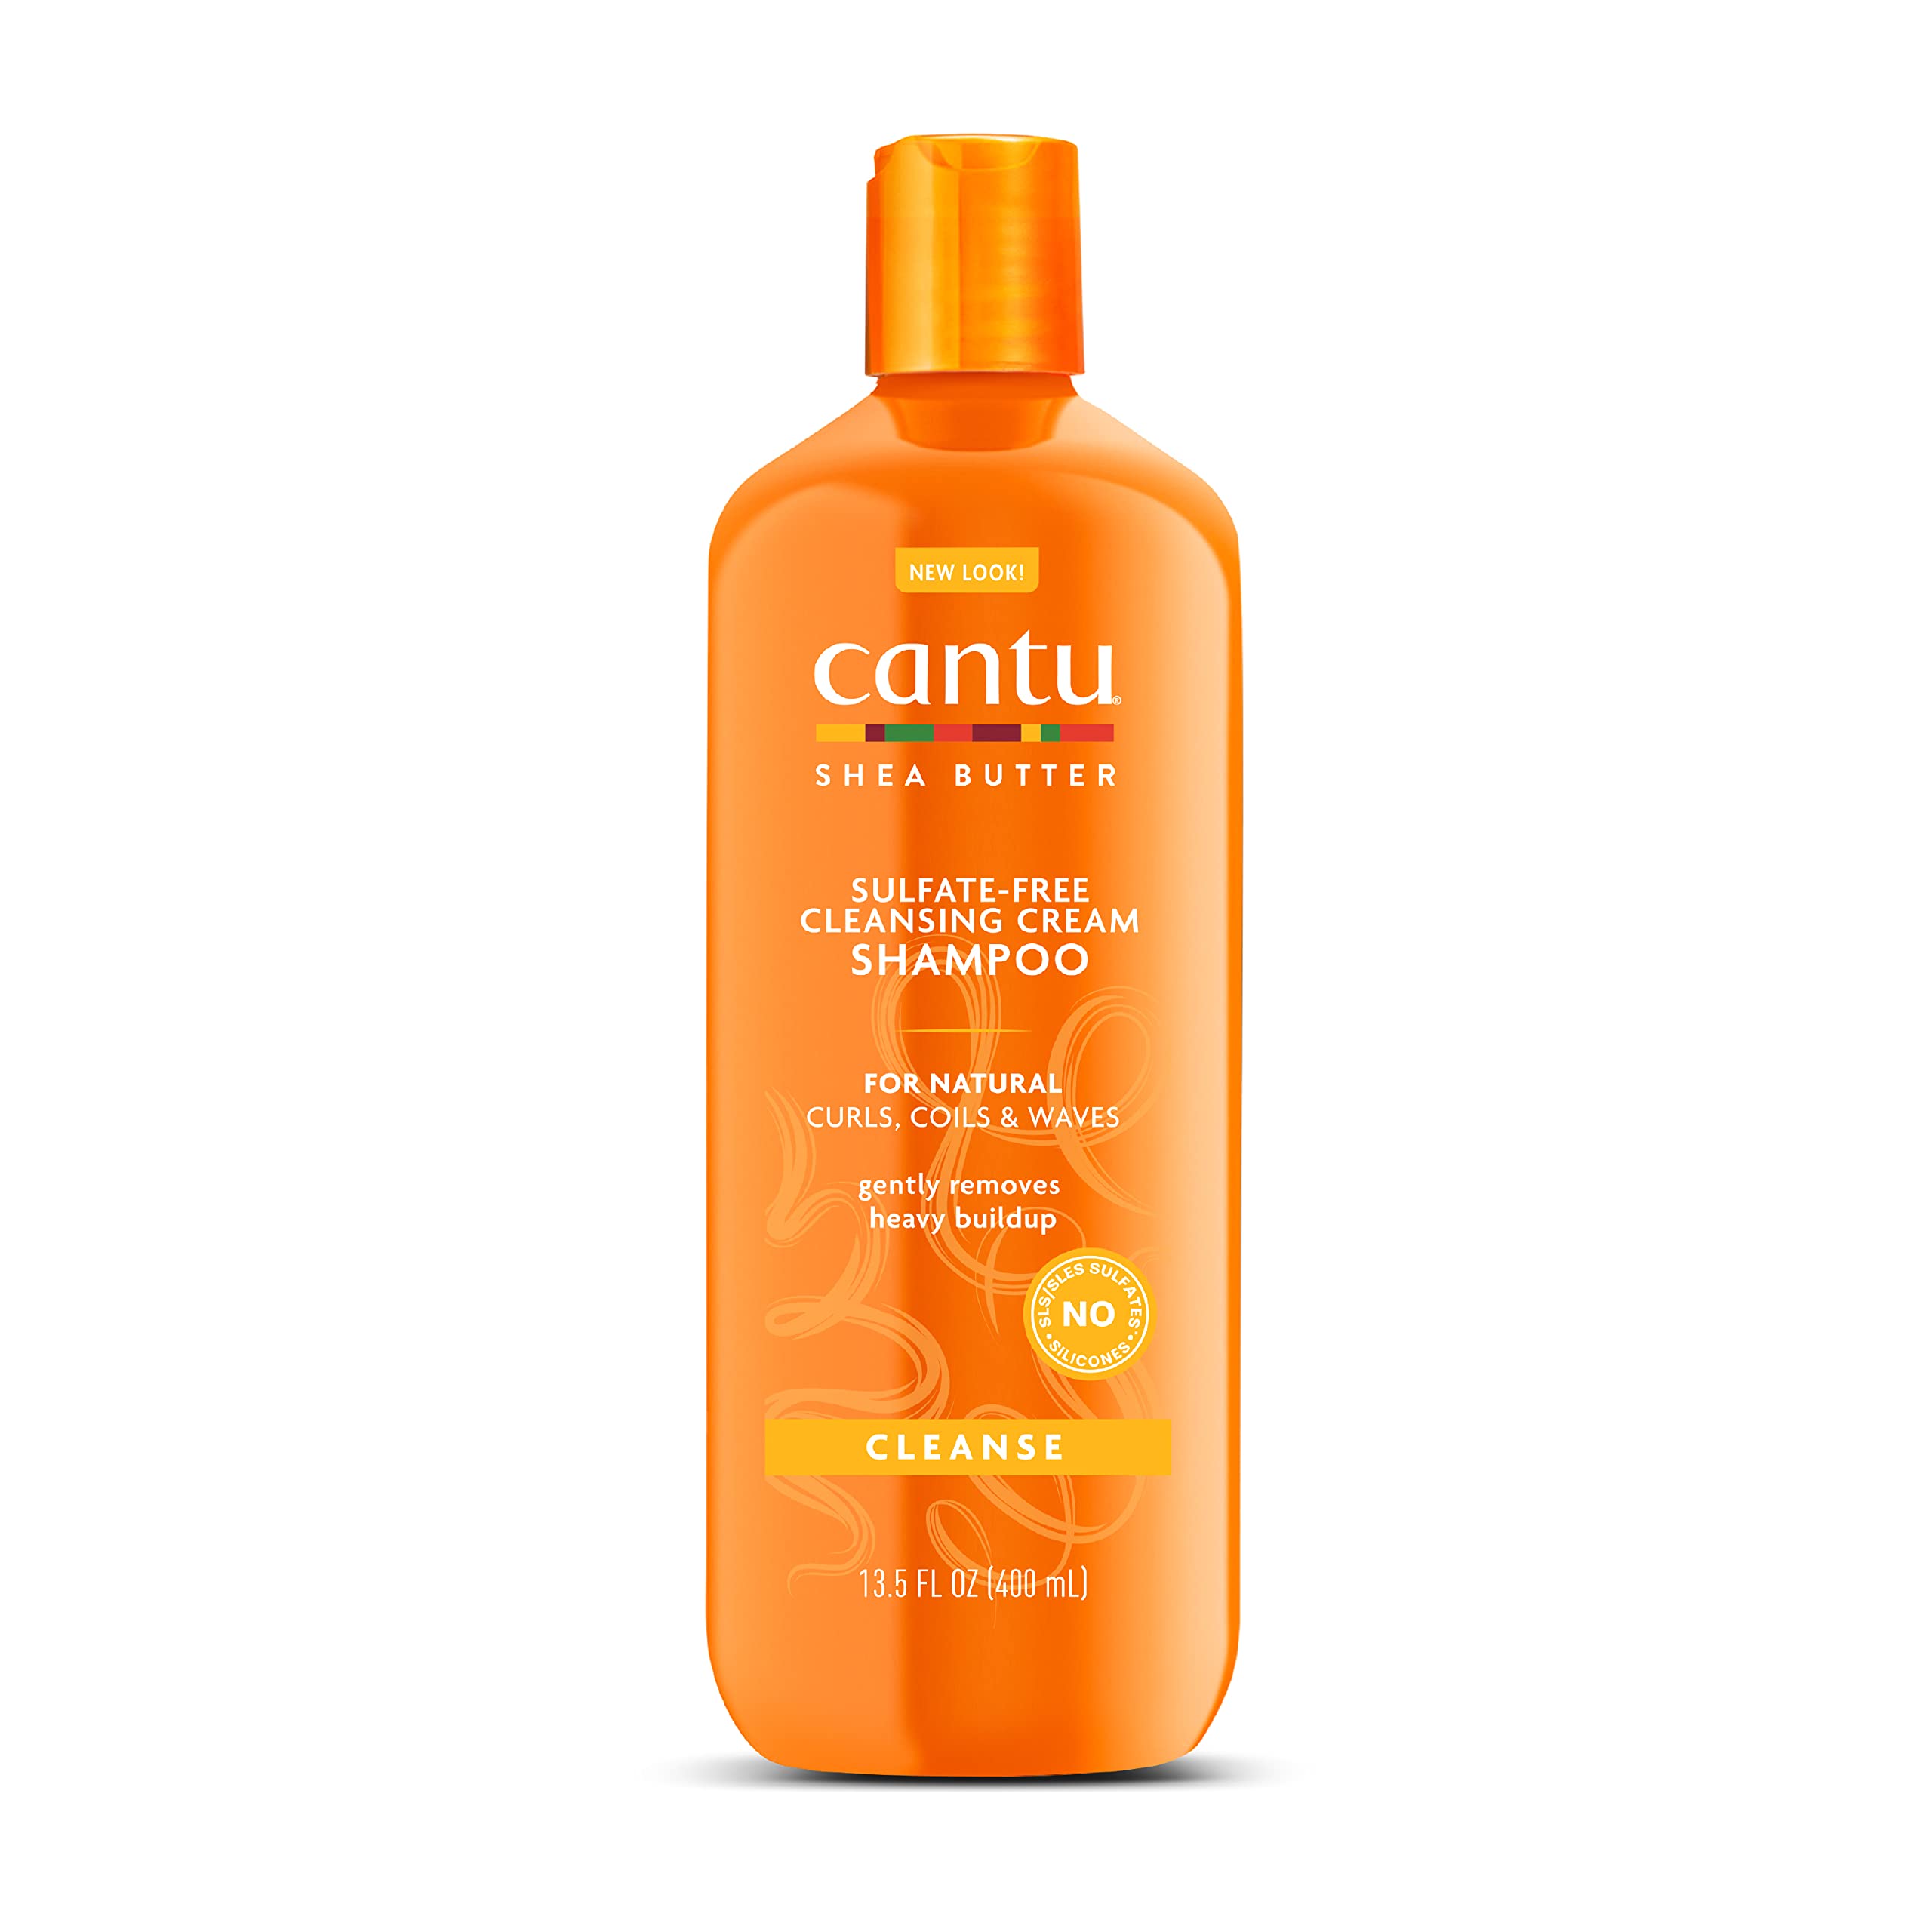 Cantu SHEA BUTTER For Natural Hair Cleansing Cream Shampoo شامبو كريمي بزبدة الشيا من كانتو